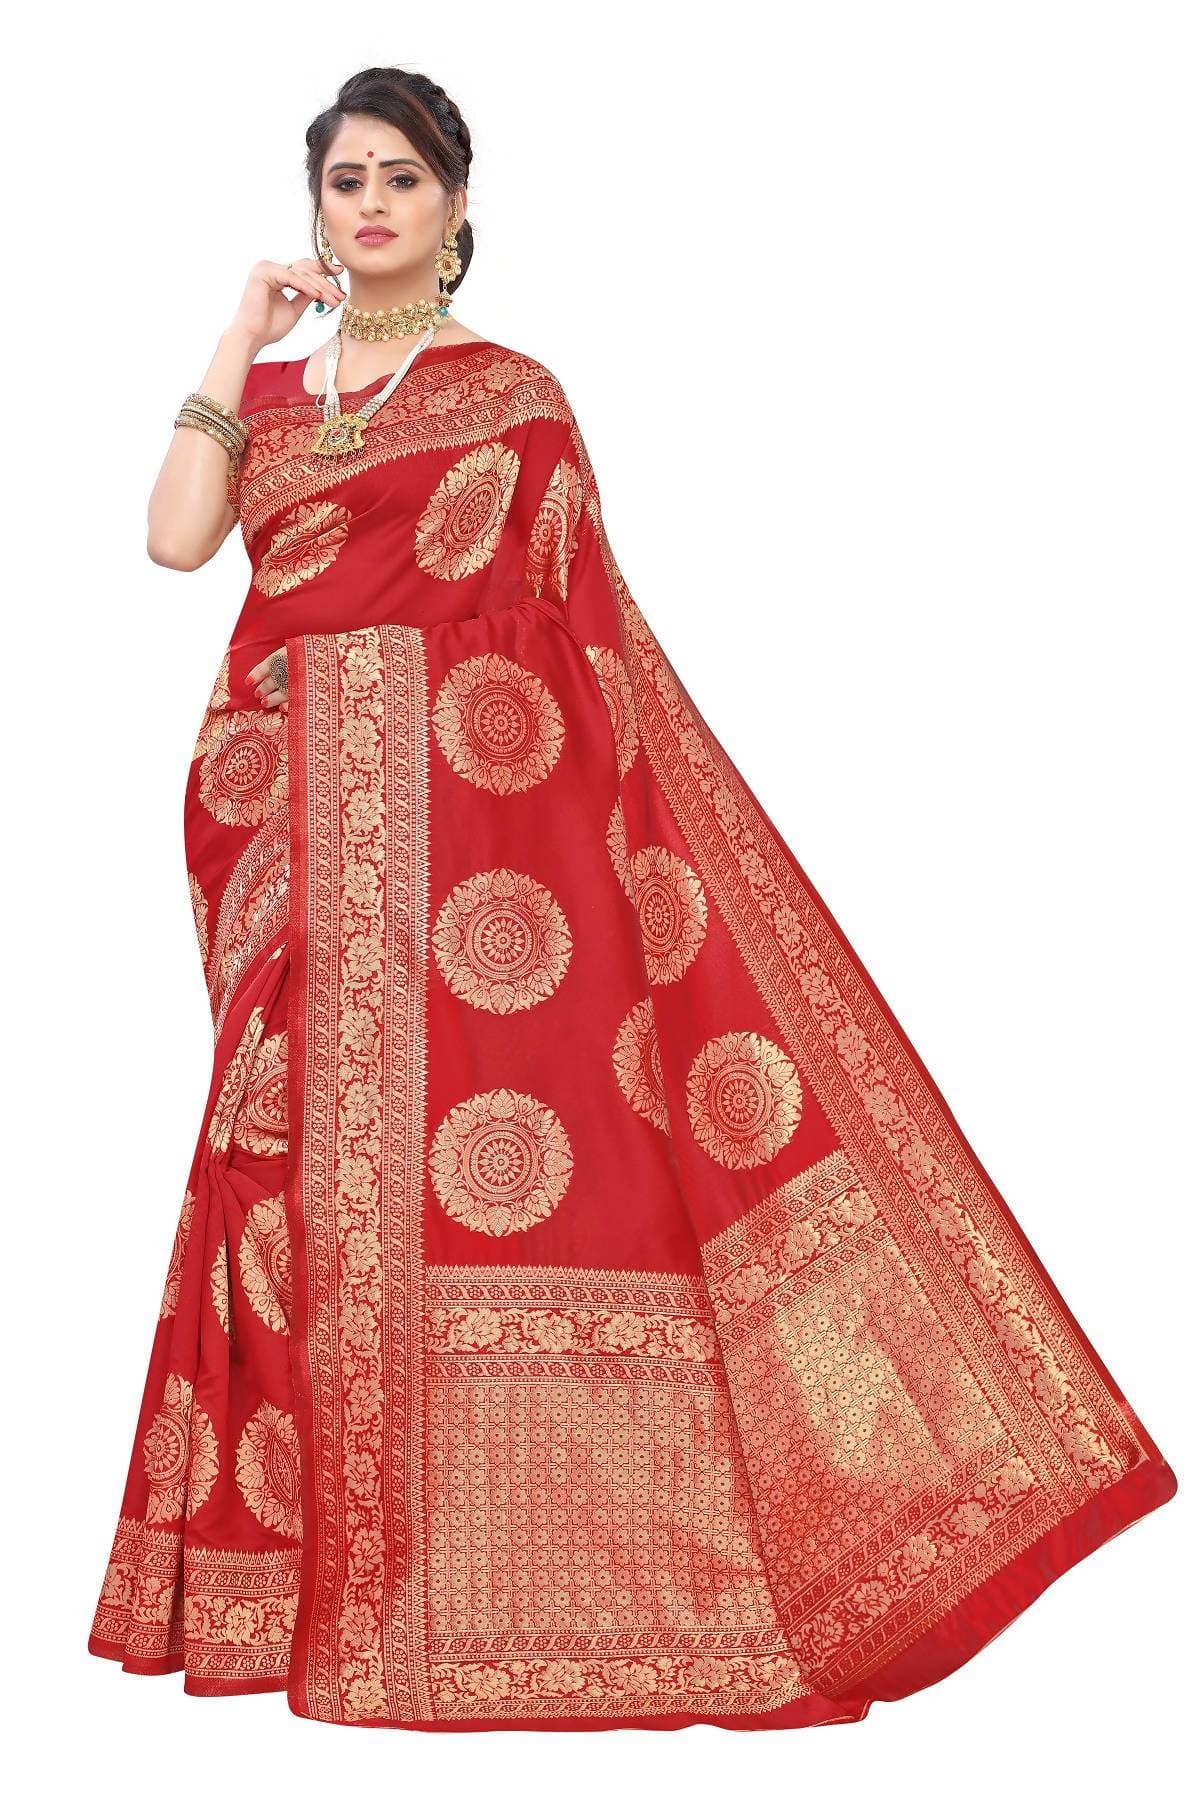 Vamika Latest Banarasi Jacquard Weaving Red Saree